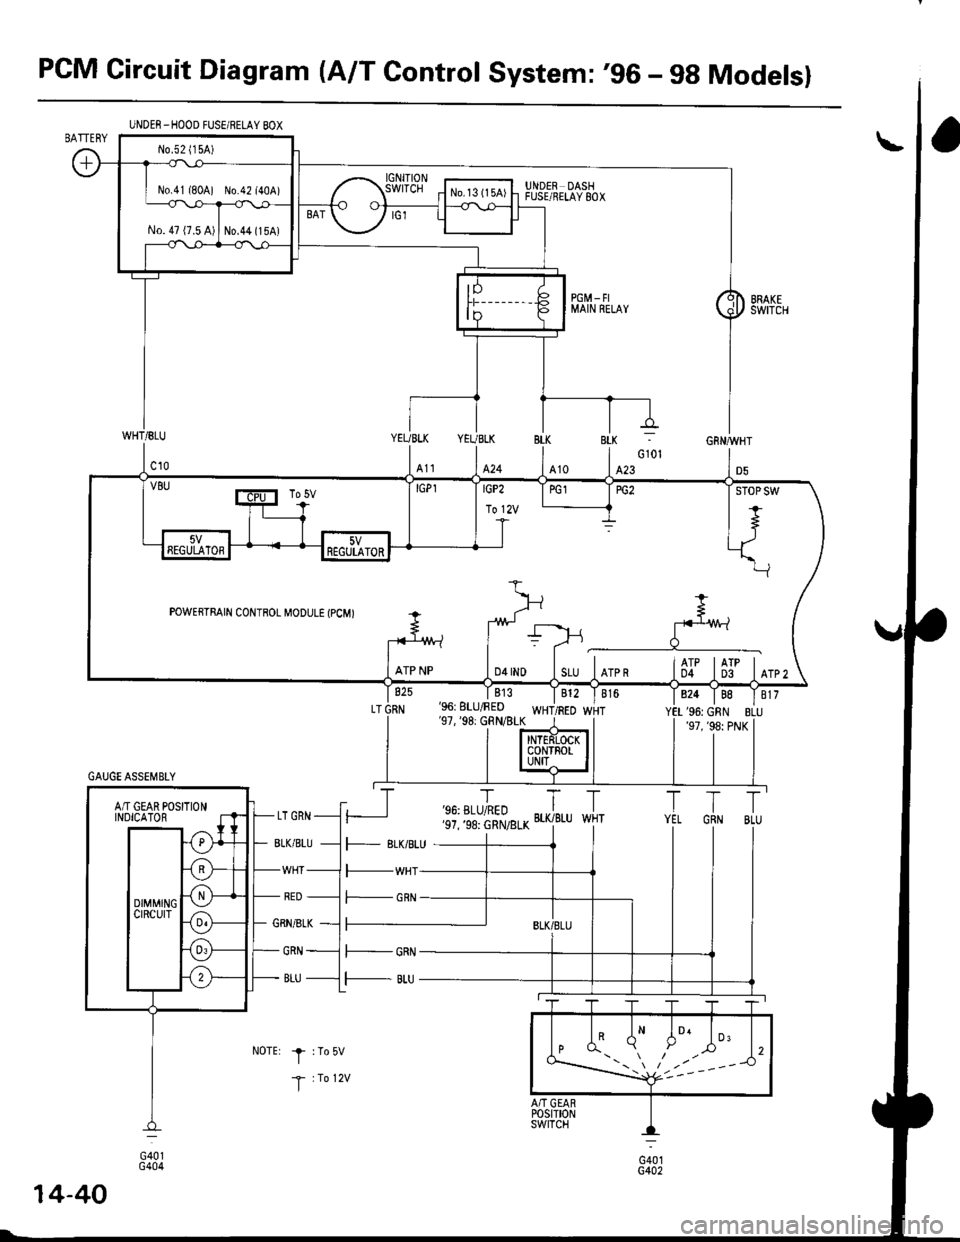 HONDA CIVIC 1996 6.G User Guide PGM Gircuit Diagram (A/T Control System: 96 - 98 Modelsl
UNDEfl -HOOD FUSE/RELAY BOX
No.41 (80A1 N0.42 l40A)
No.47 {7.5 A)
No.l3 (15A)
Arp Np lon,^o l r,, lotrr l 6lt l 3]t lot*
UNDER DASHFUSE/REIAY 